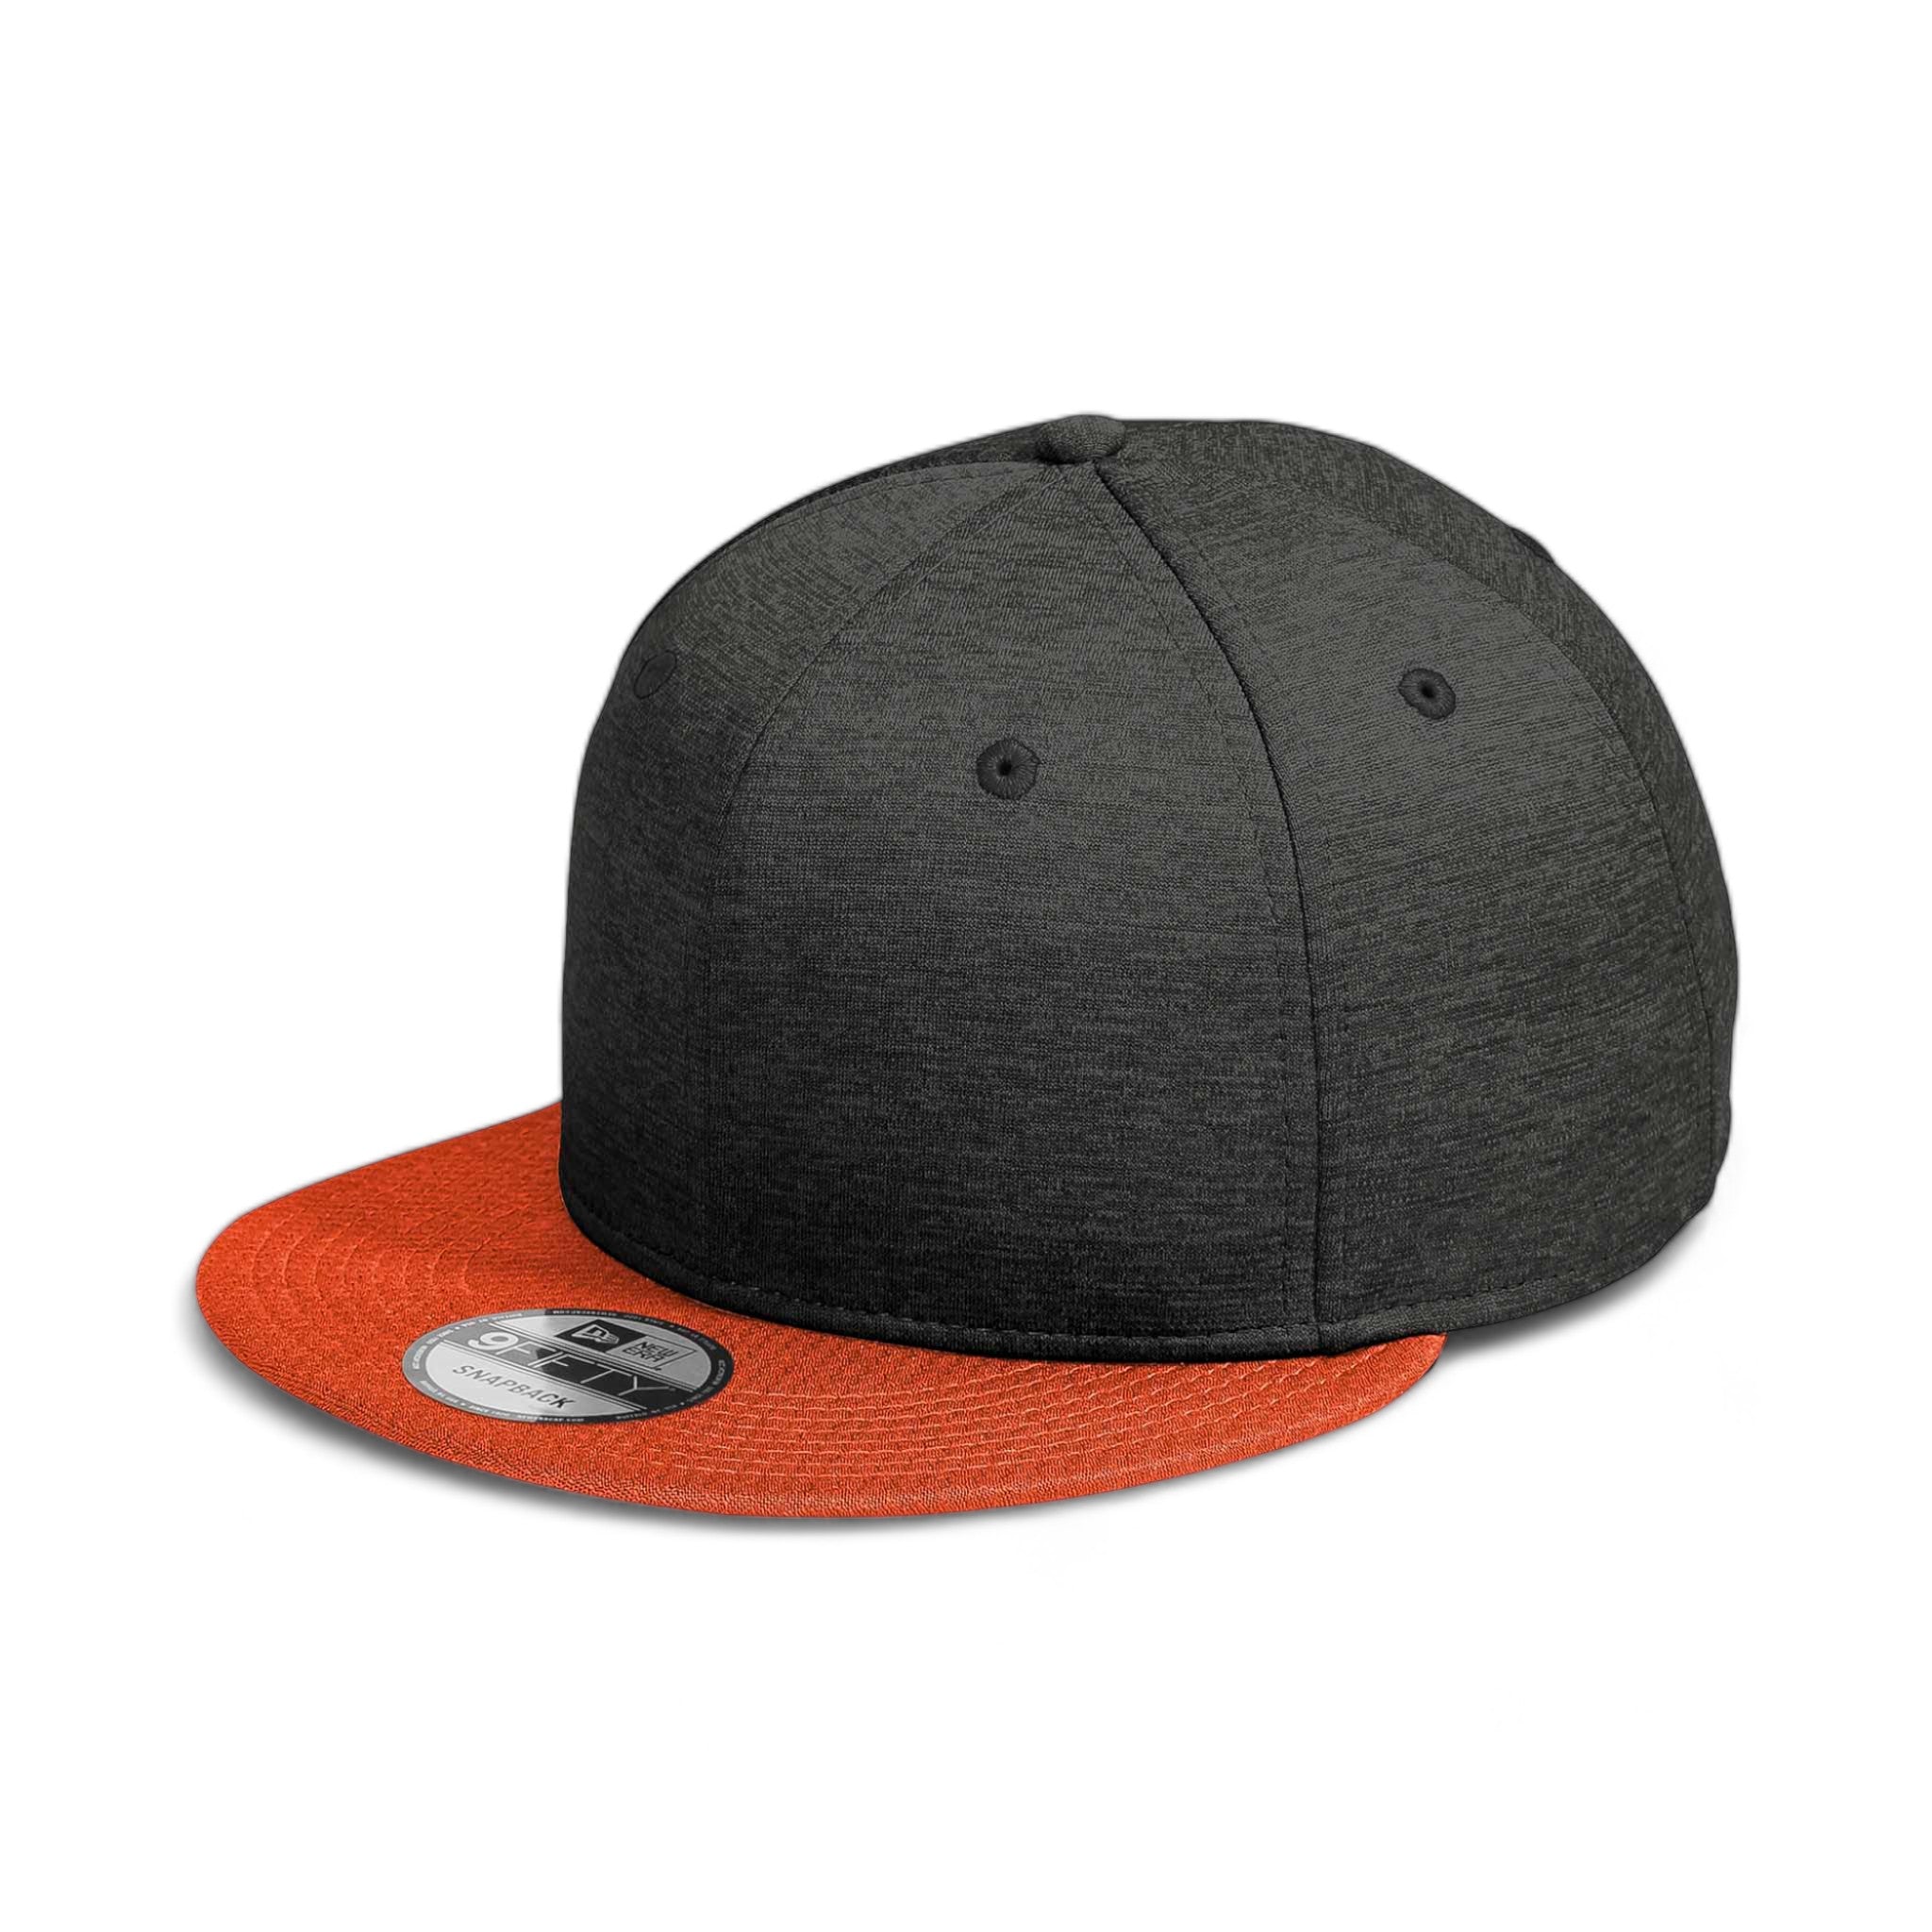 Side view of New Era NE408 custom hat in black shadow heather and deep orange